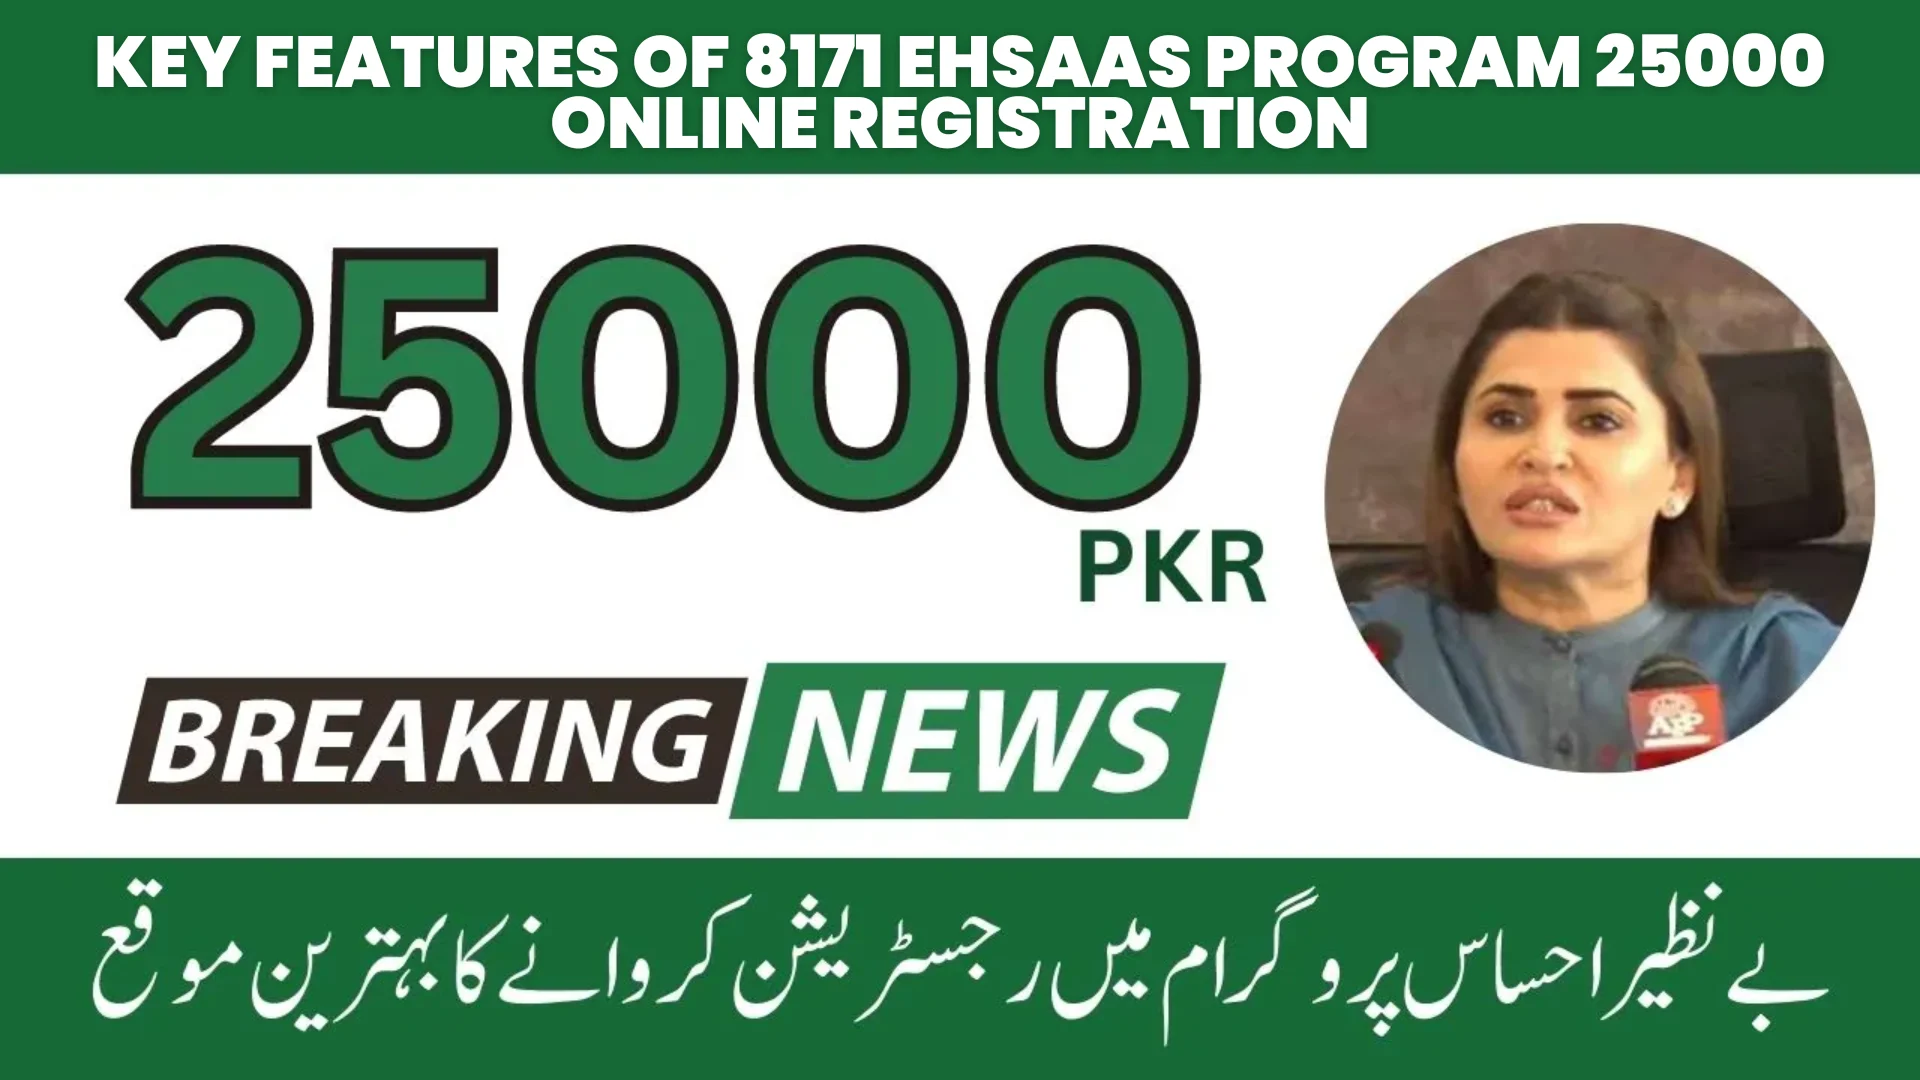 Key Features of 8171 Ehsaas Program 25000 online Registration